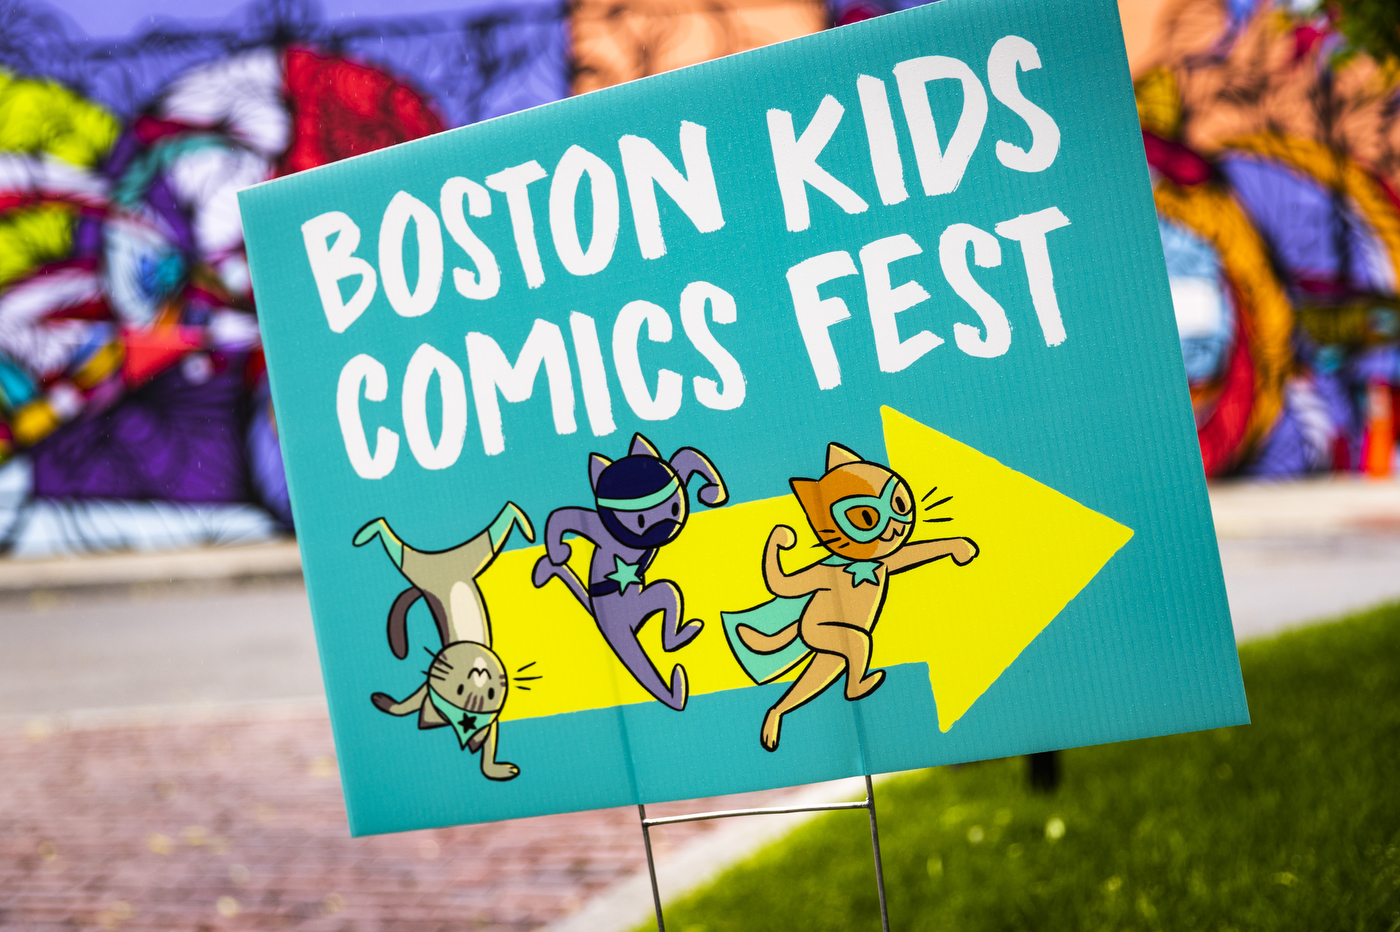 Boston Kids Comic Fest pamphlet